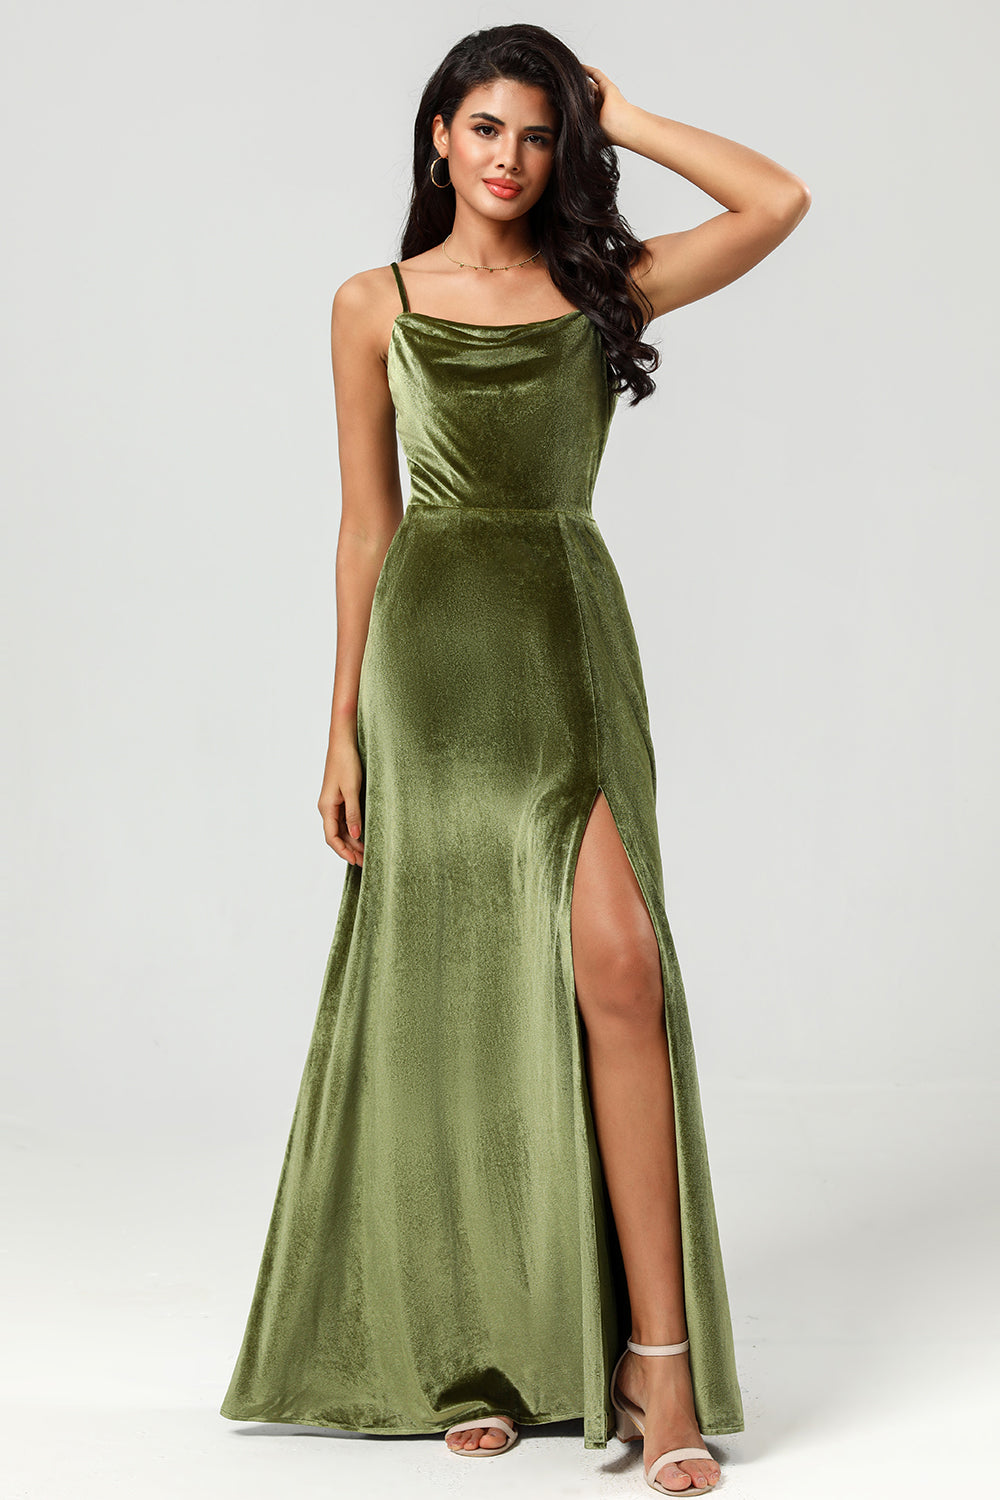 Velvet A Line Green Bridesmaid Dress with Slit